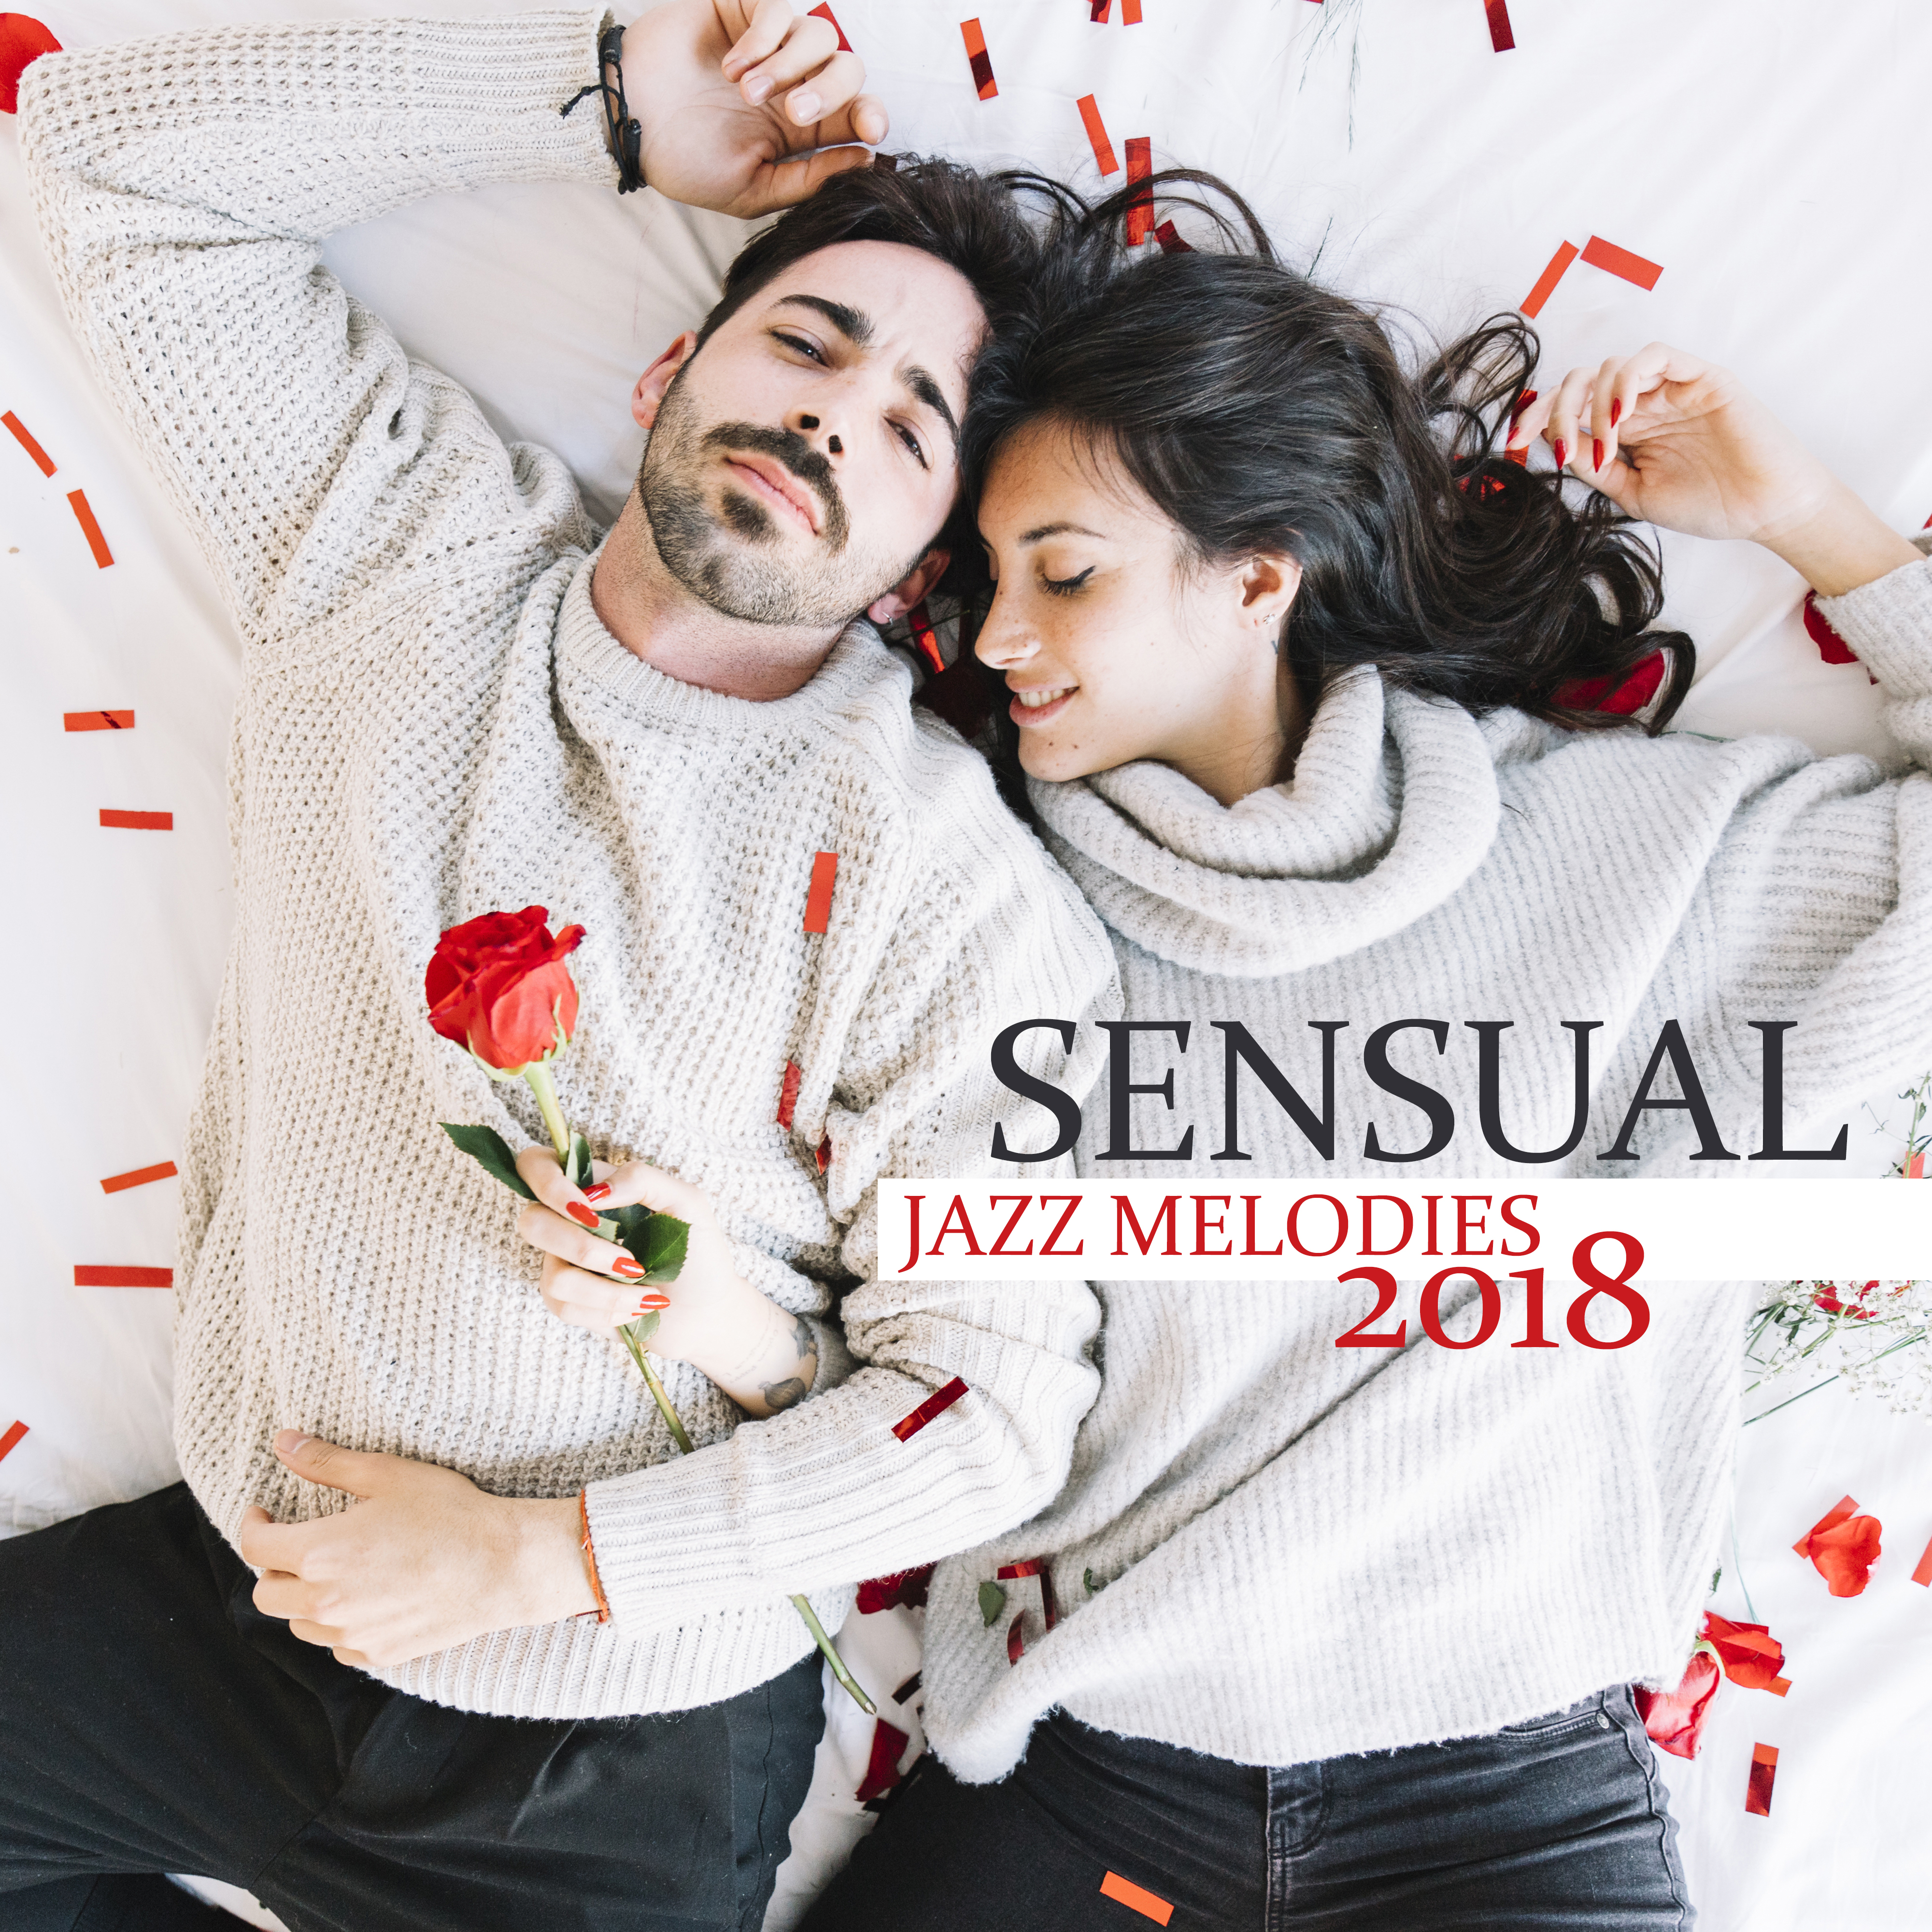 Sensual Jazz Melodies 2018